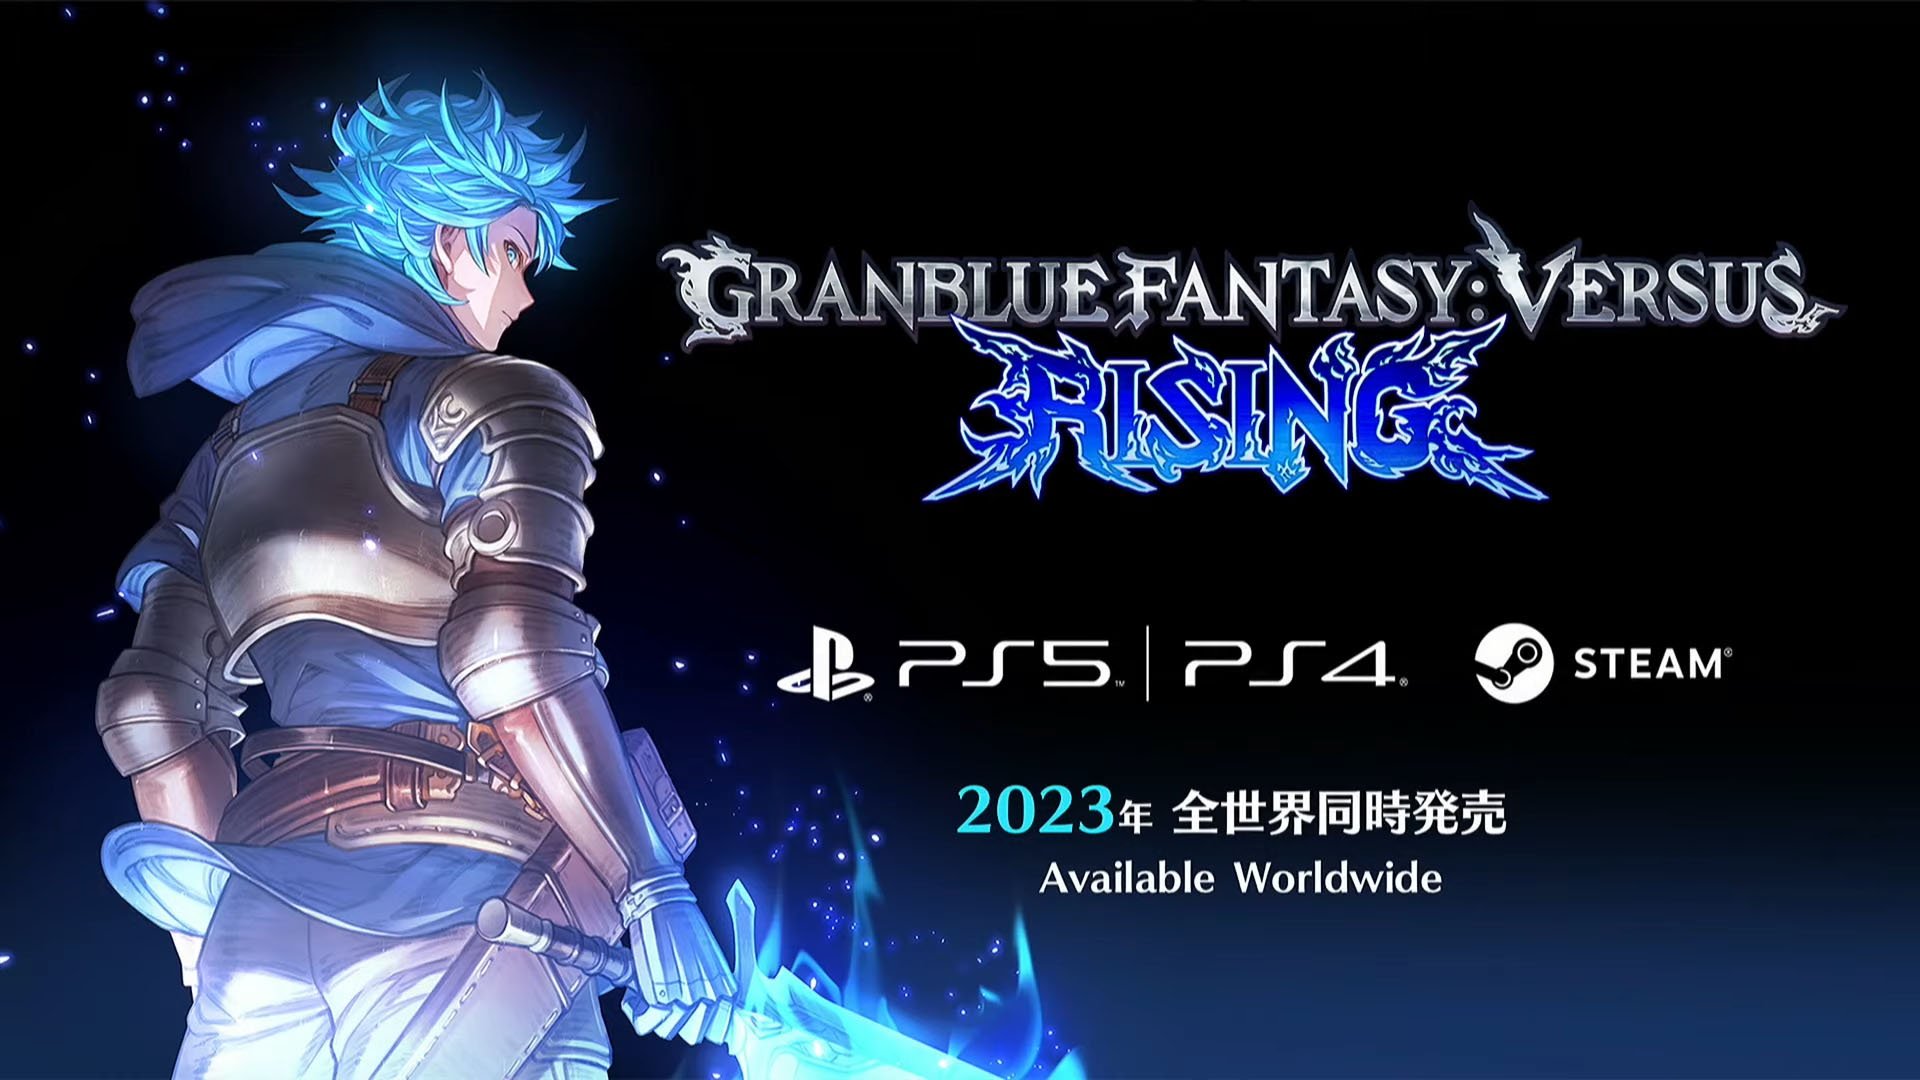 Granblue Fantasy Versus: Rising - Official Reveal Trailer 